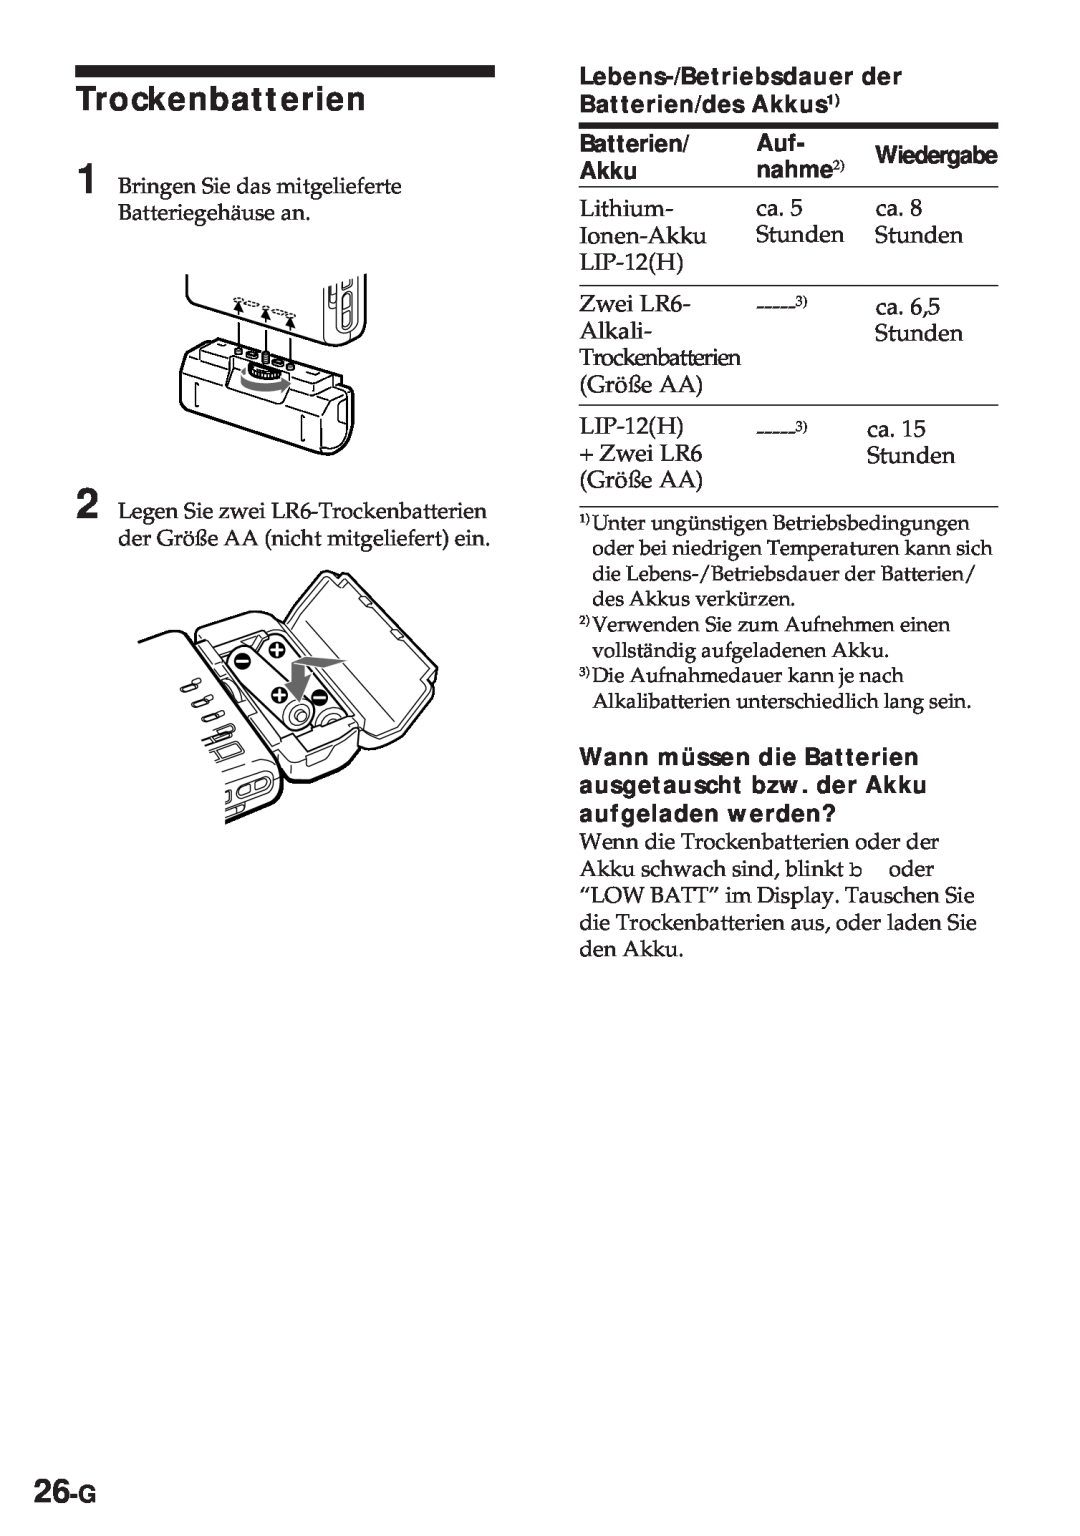 Sony MZ-R30 operating instructions Trockenbatterien, 26-G, Lebens-/Betriebsdauer der Batterien/des Akkus1, nahme2 